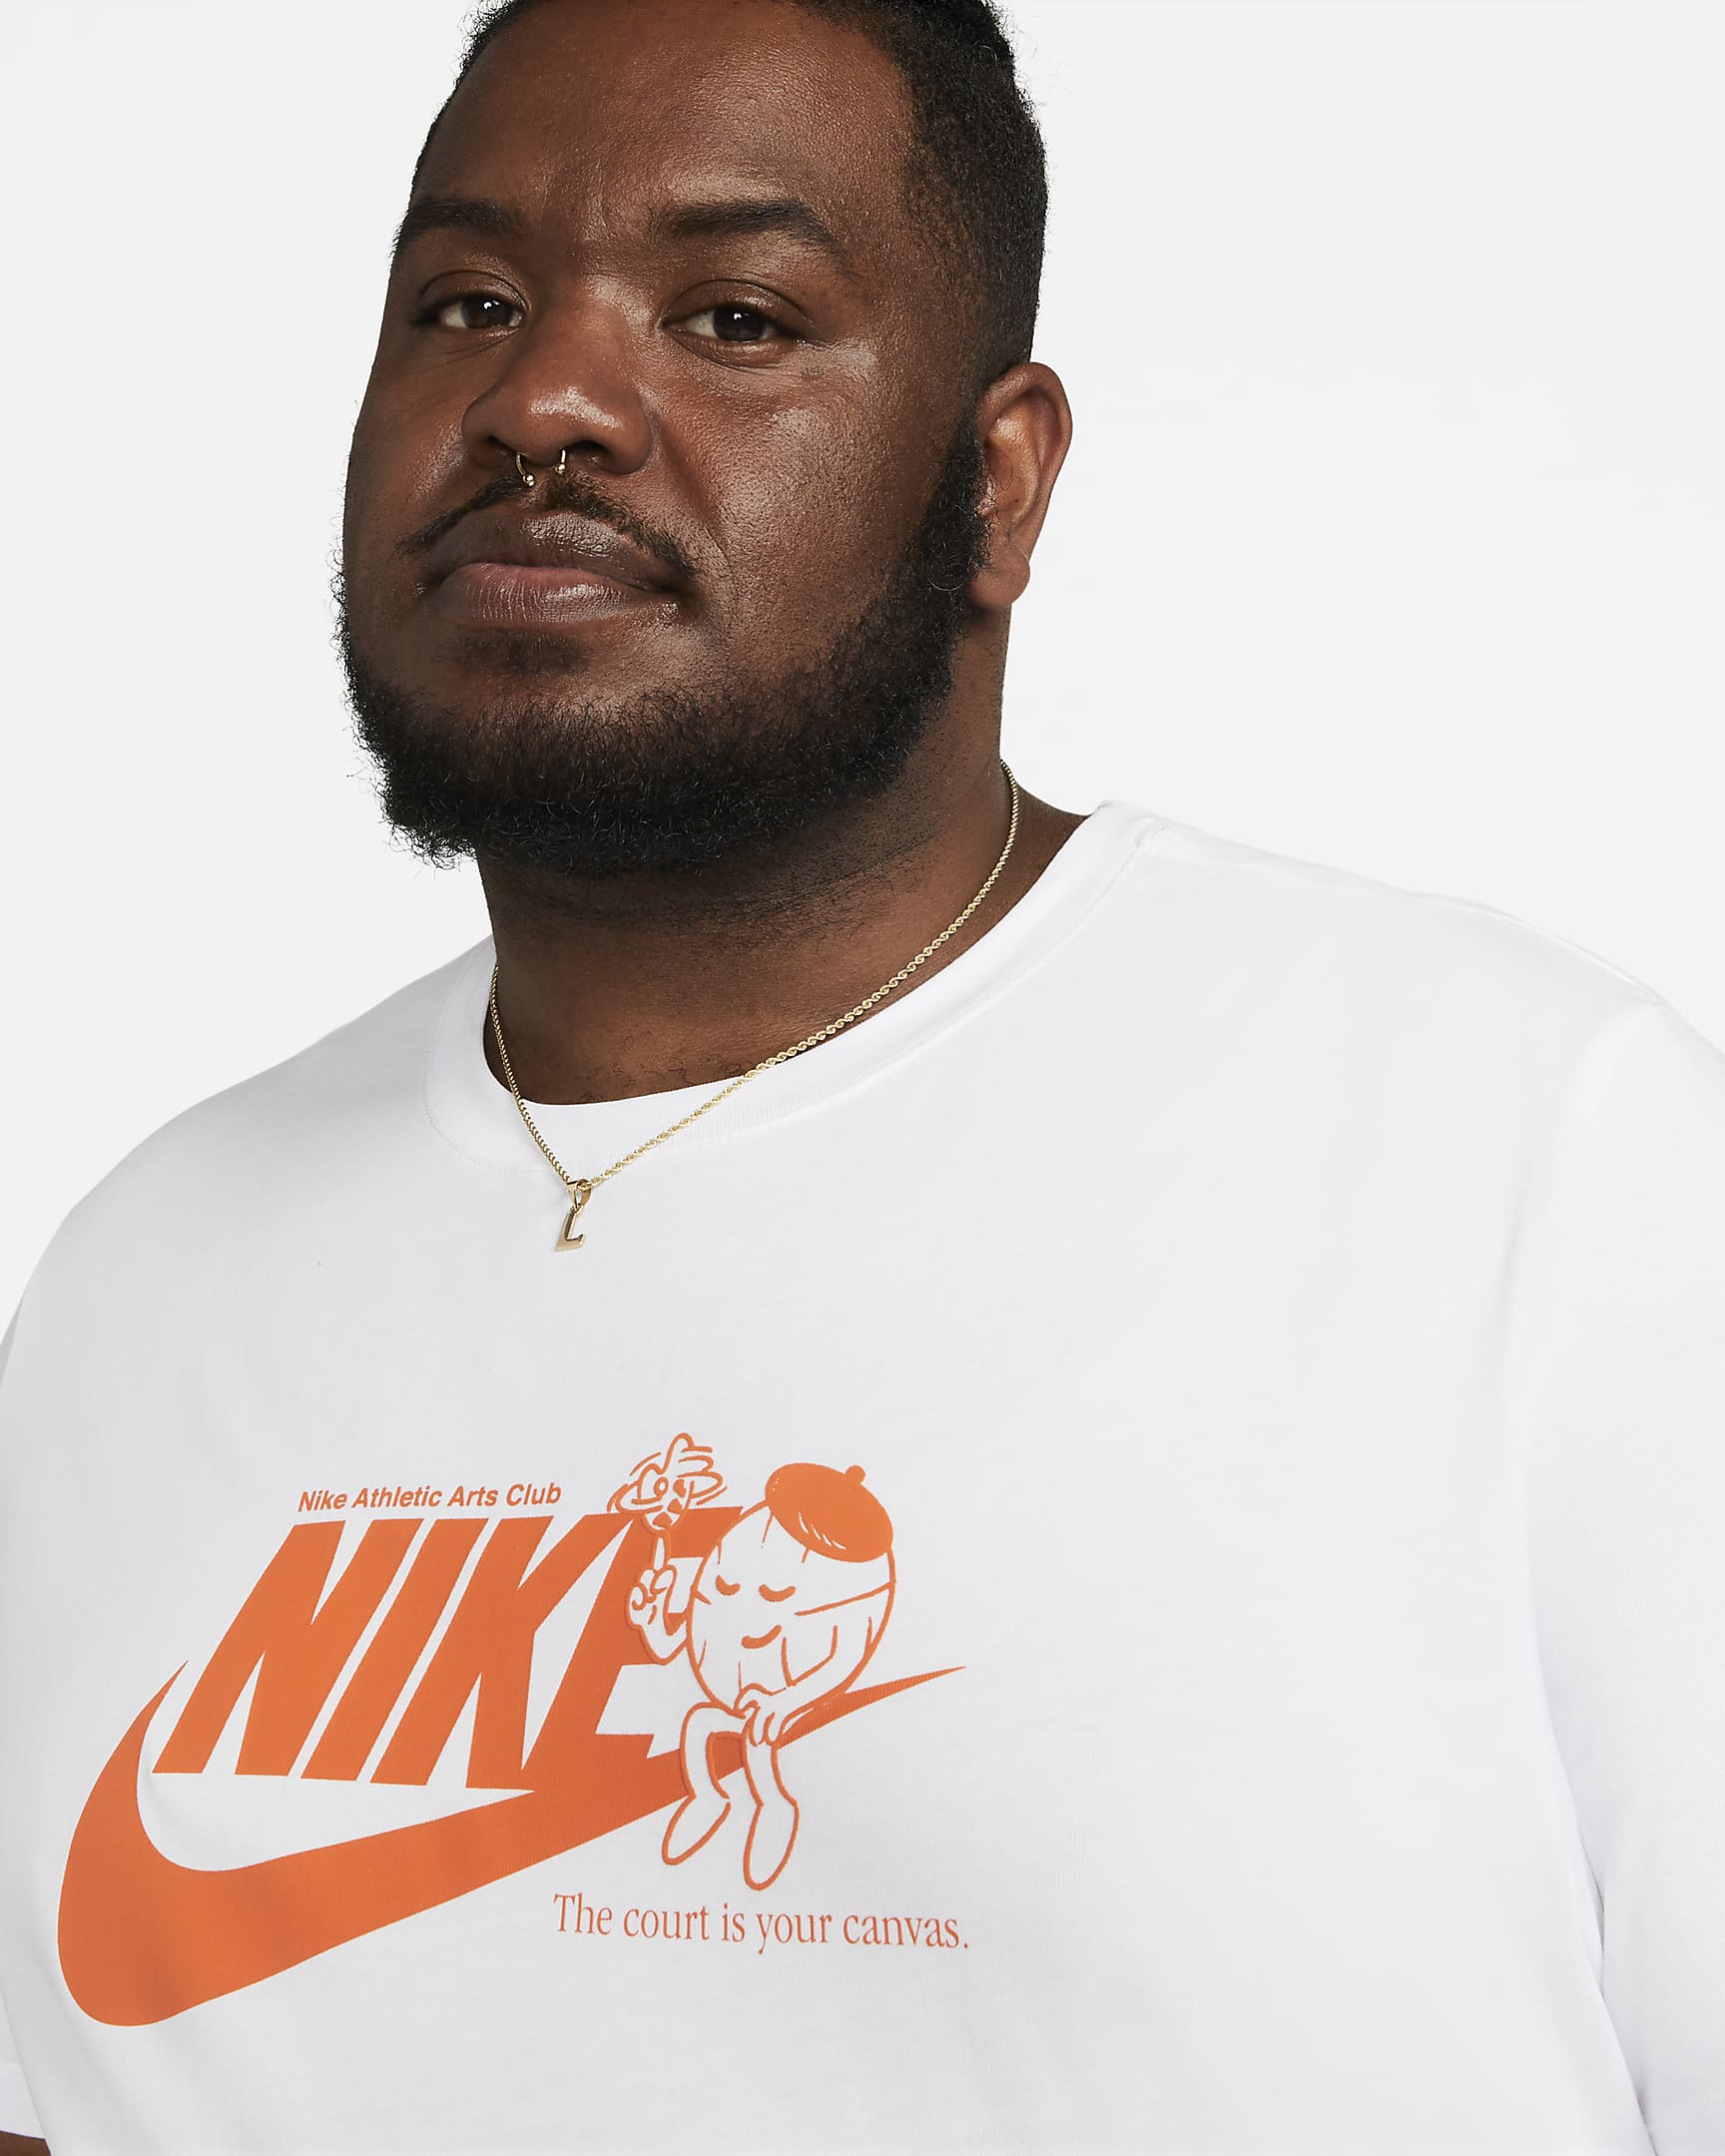 Playera para hombre Nike Sportswear. Nike.com